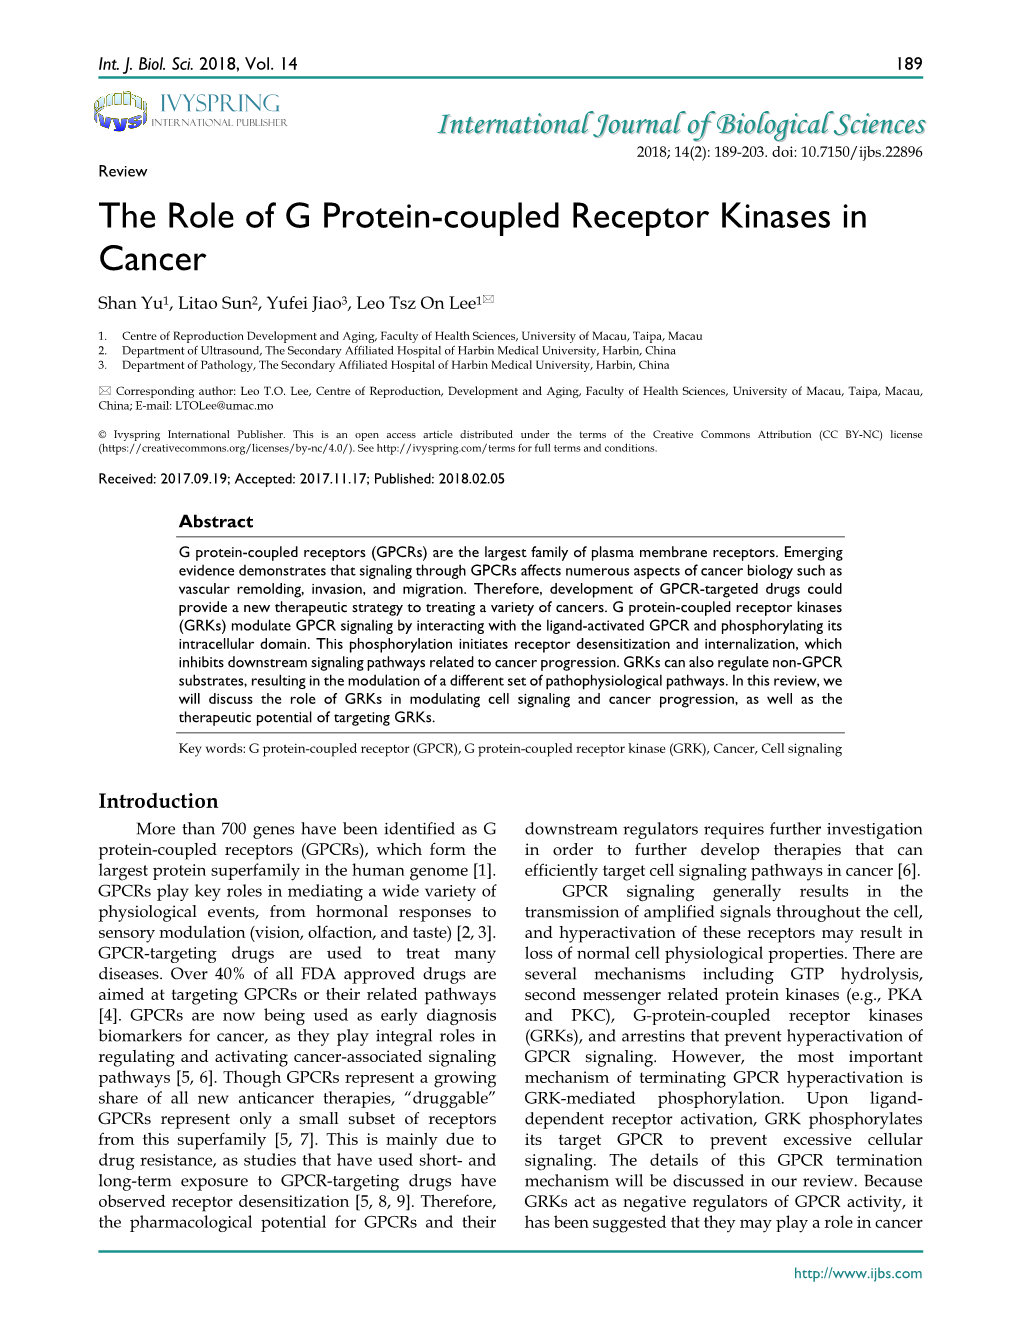 The Role of G Protein-Coupled Receptor Kinases in Cancer Shan Yu1, Litao Sun2, Yufei Jiao3, Leo Tsz on Lee1